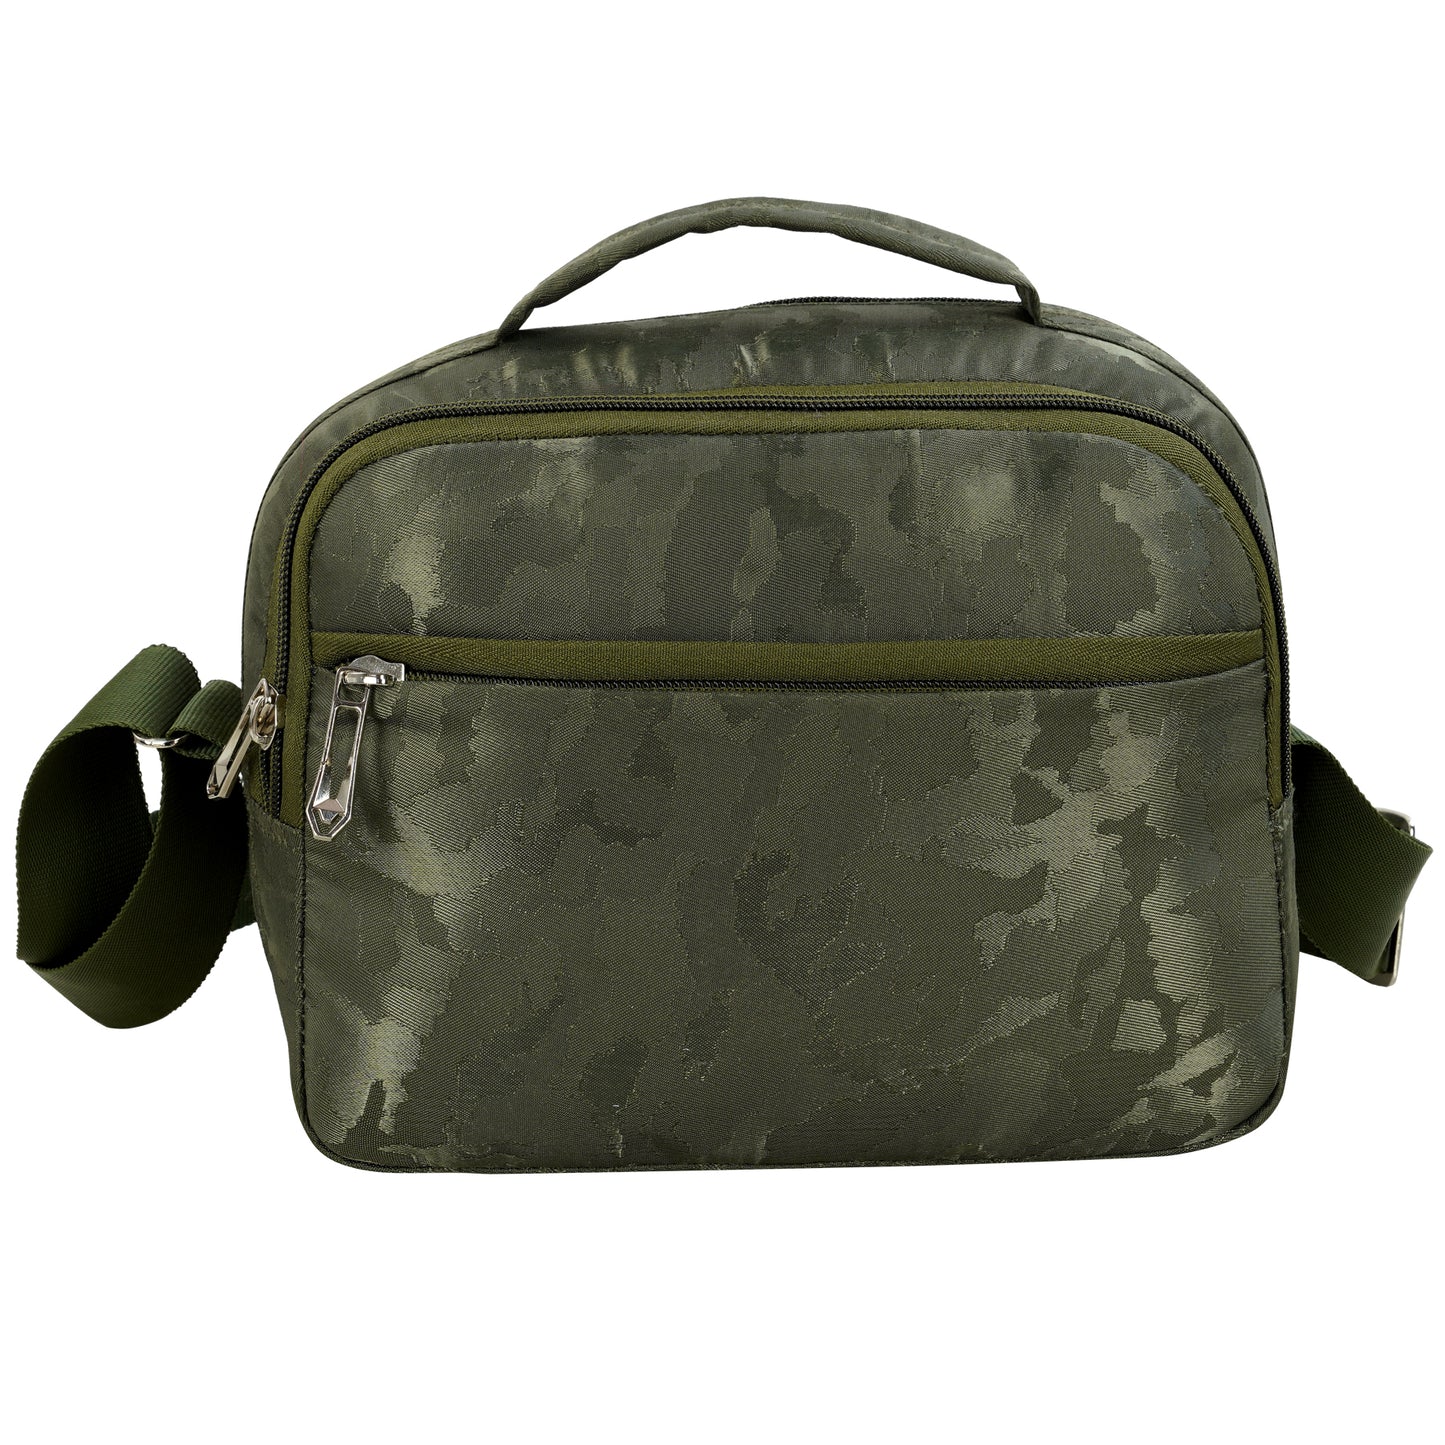 Fly Fashion Sling Bag | Cross-Body Bags With Adjustable Shoulder Strap | Ladies Purse Handbag - Green